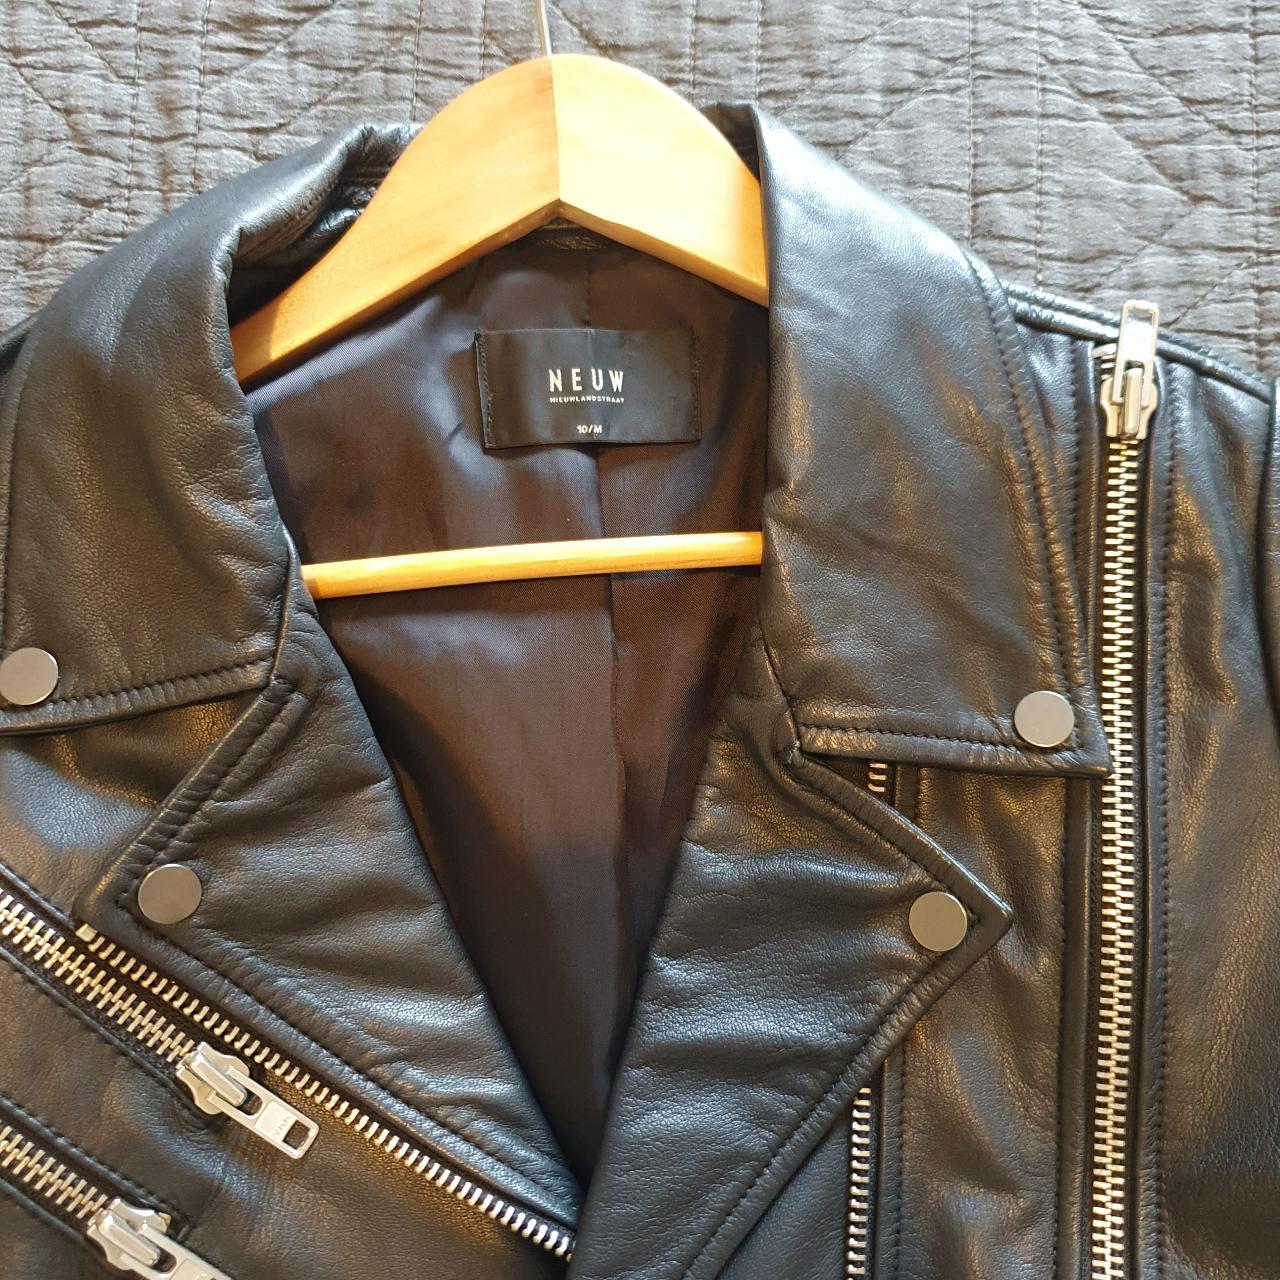 Neuw leather jacket with zip details Size... - Depop